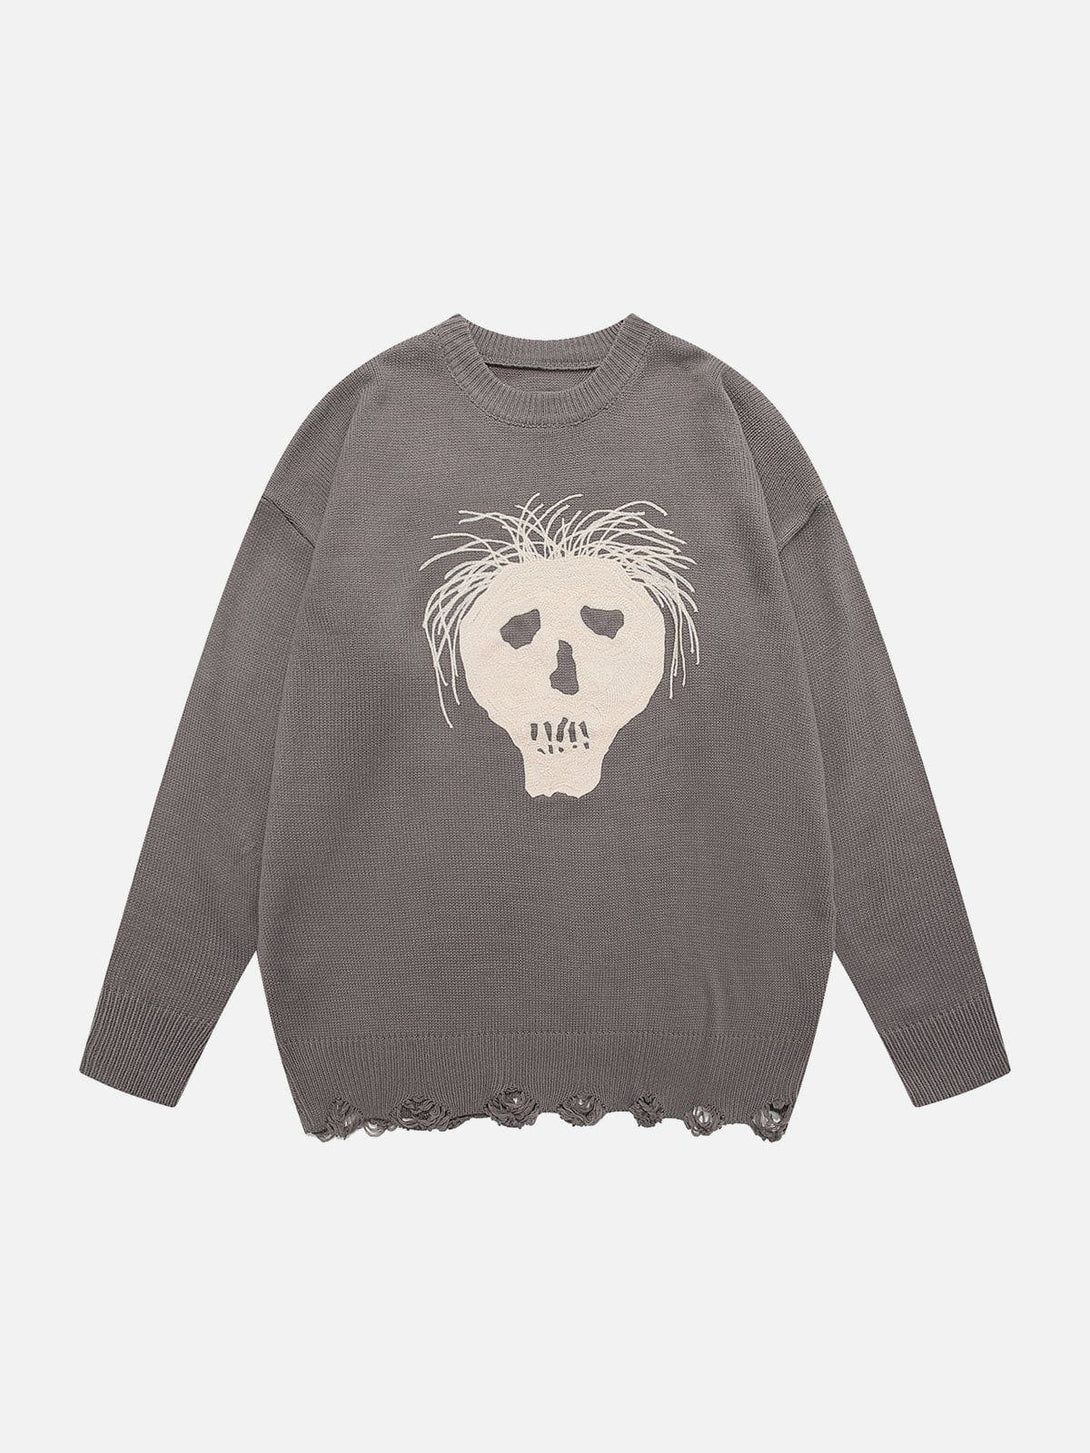 Majesda® - Skull Sticker Sweater outfit ideas streetwear fashion